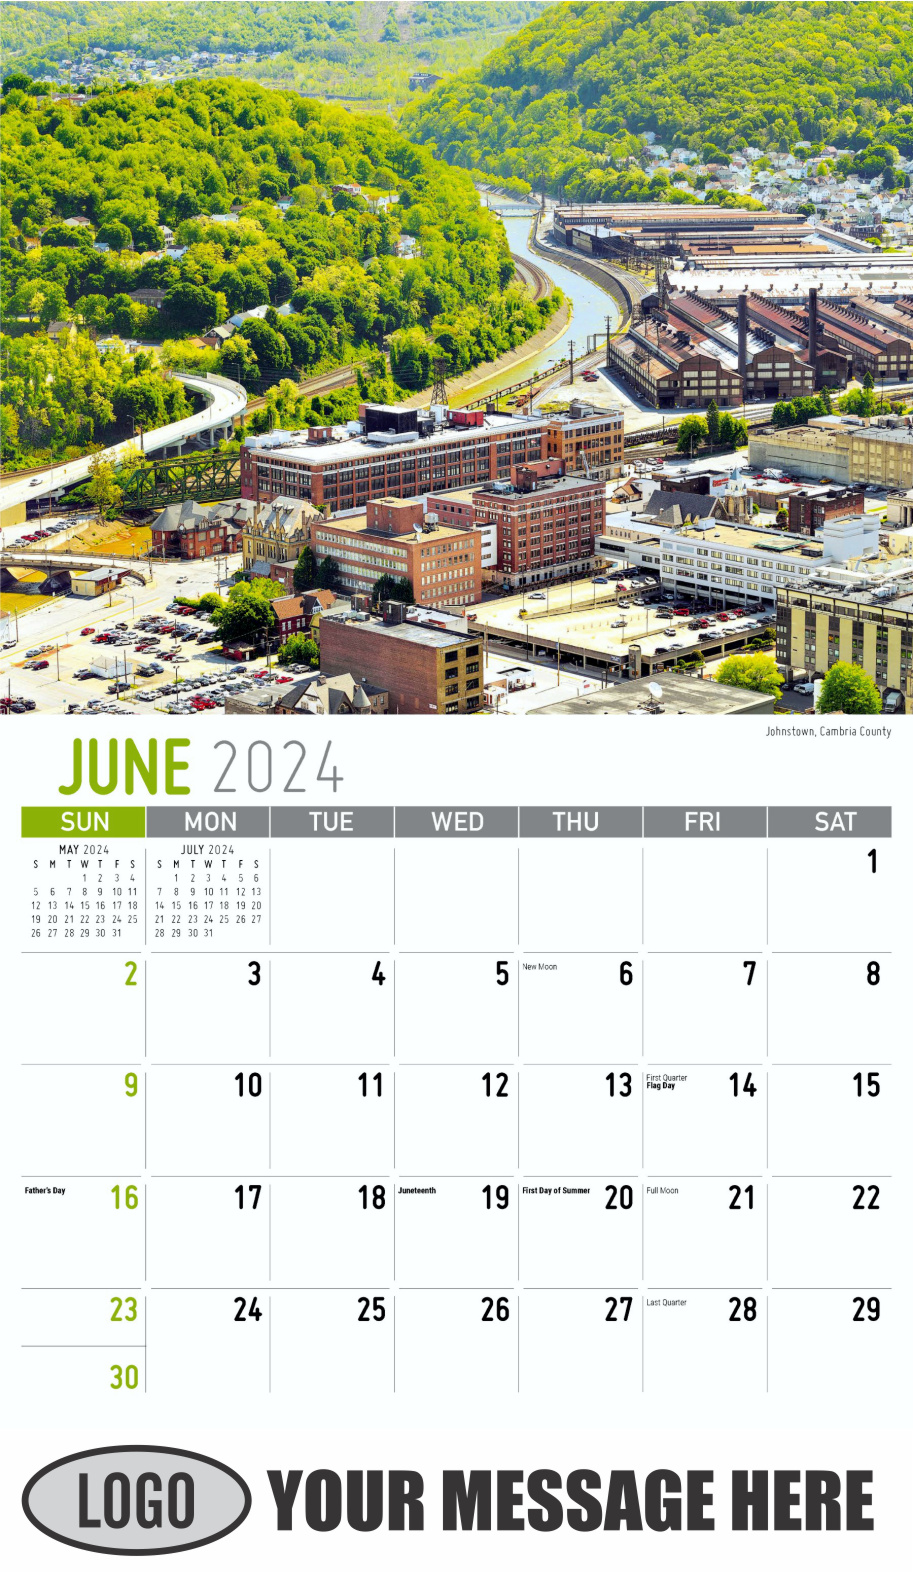 Scenes of Pennsylvania 2024 Business Promotion Calendar - June